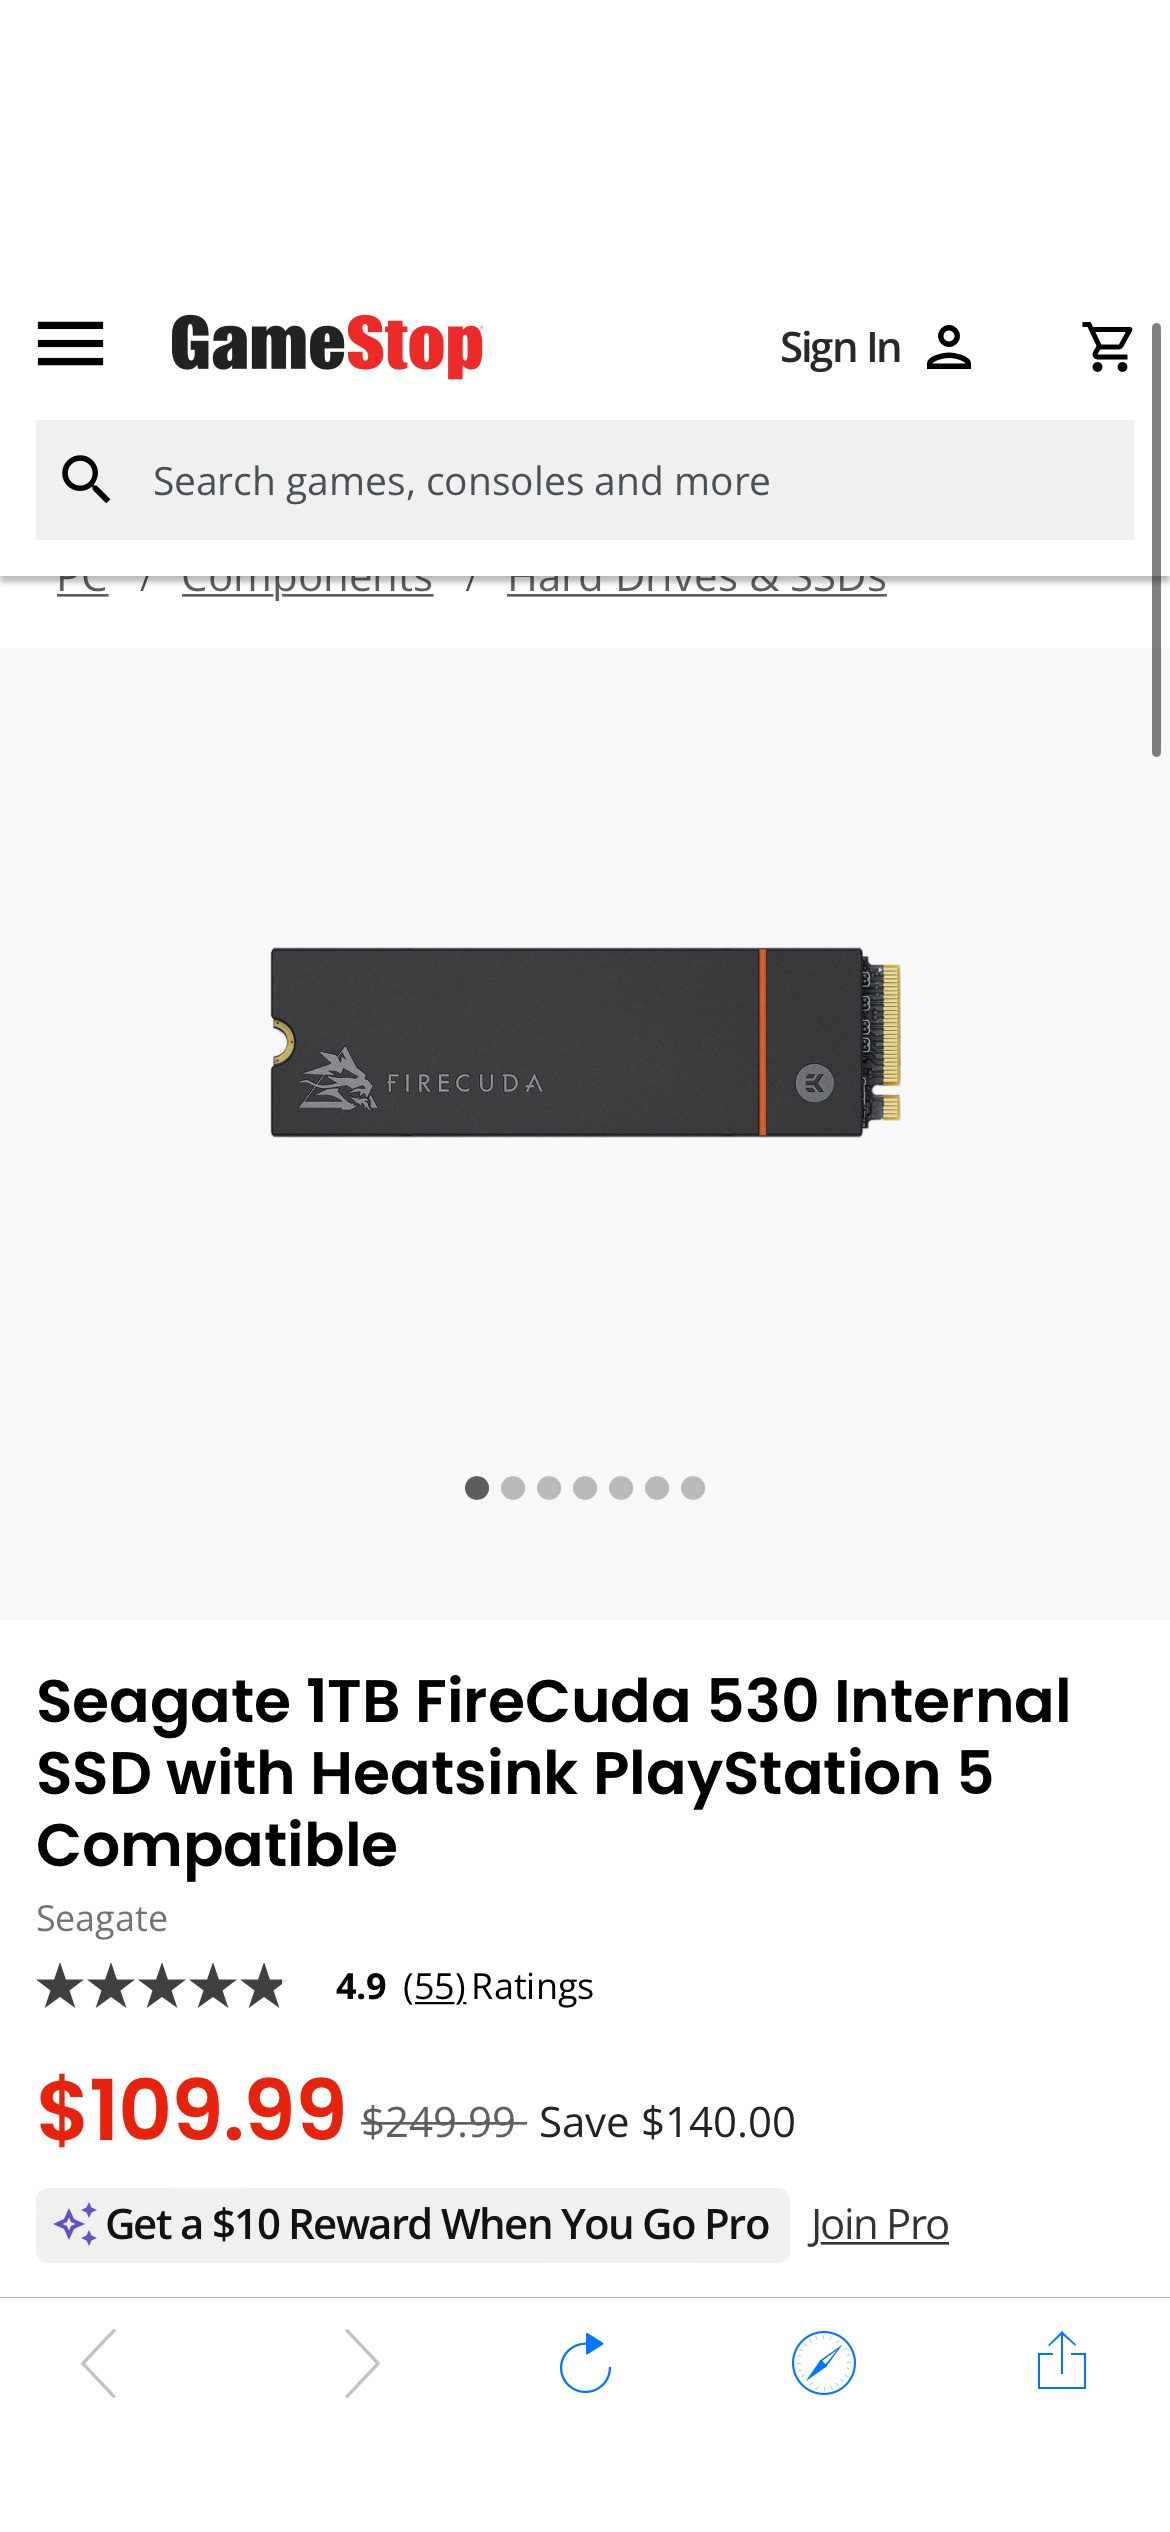 Seagate ZP1000GM3A023 1TB FireCuda 530 Internal SSD with Heatsink PlayStation 5 Compatible | GameStop
希捷 Fire Cuda 530 SSD